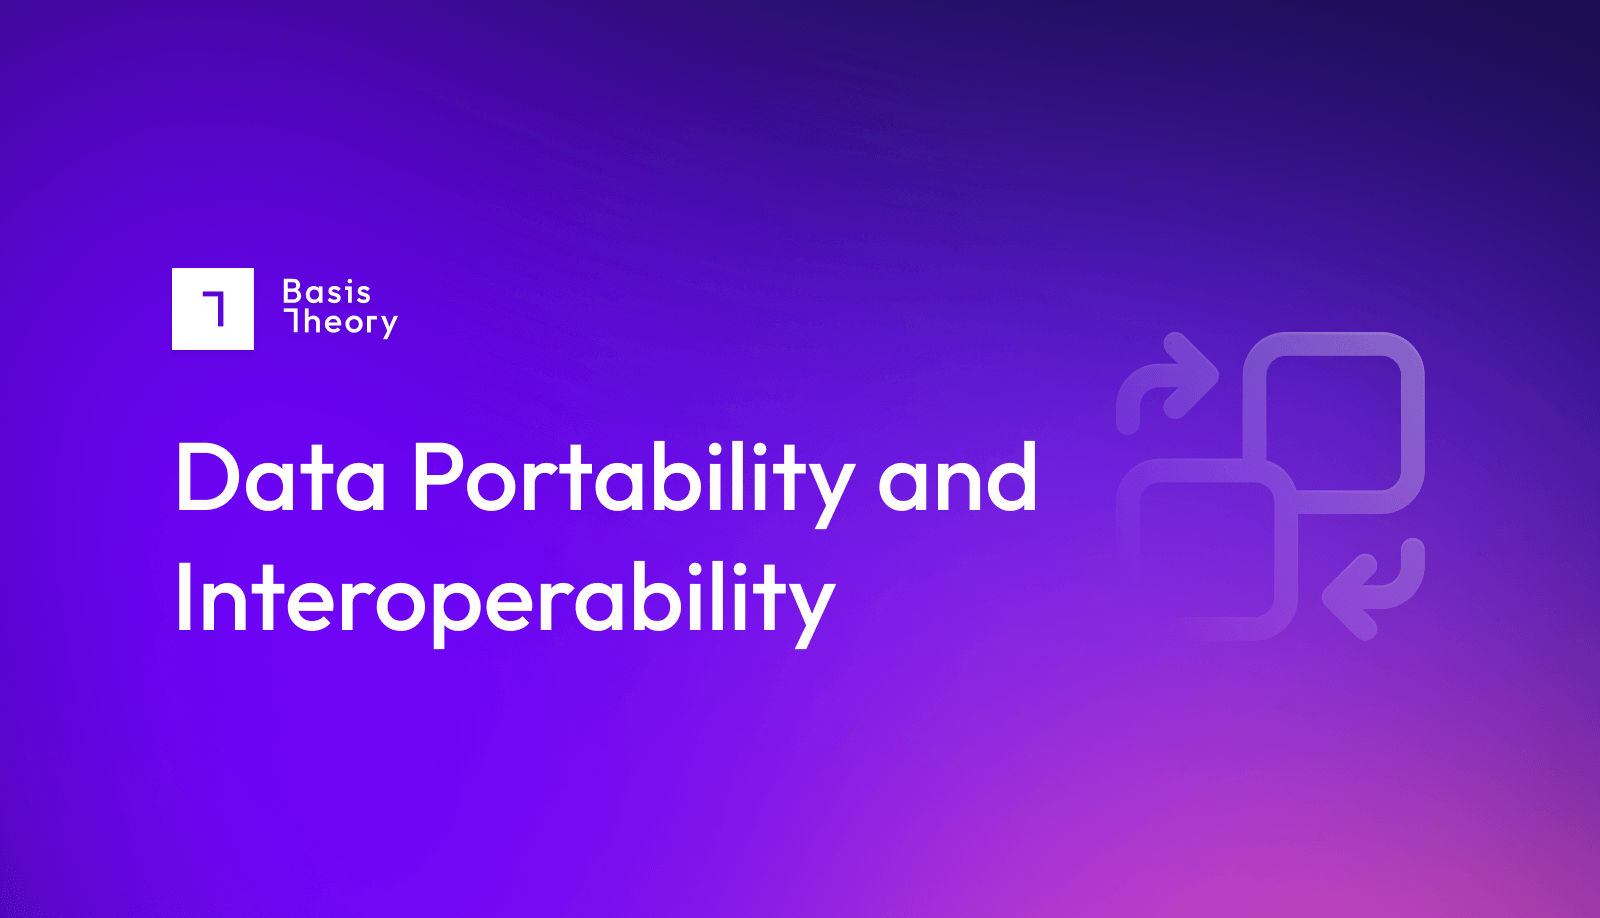 Data portability and interoperability